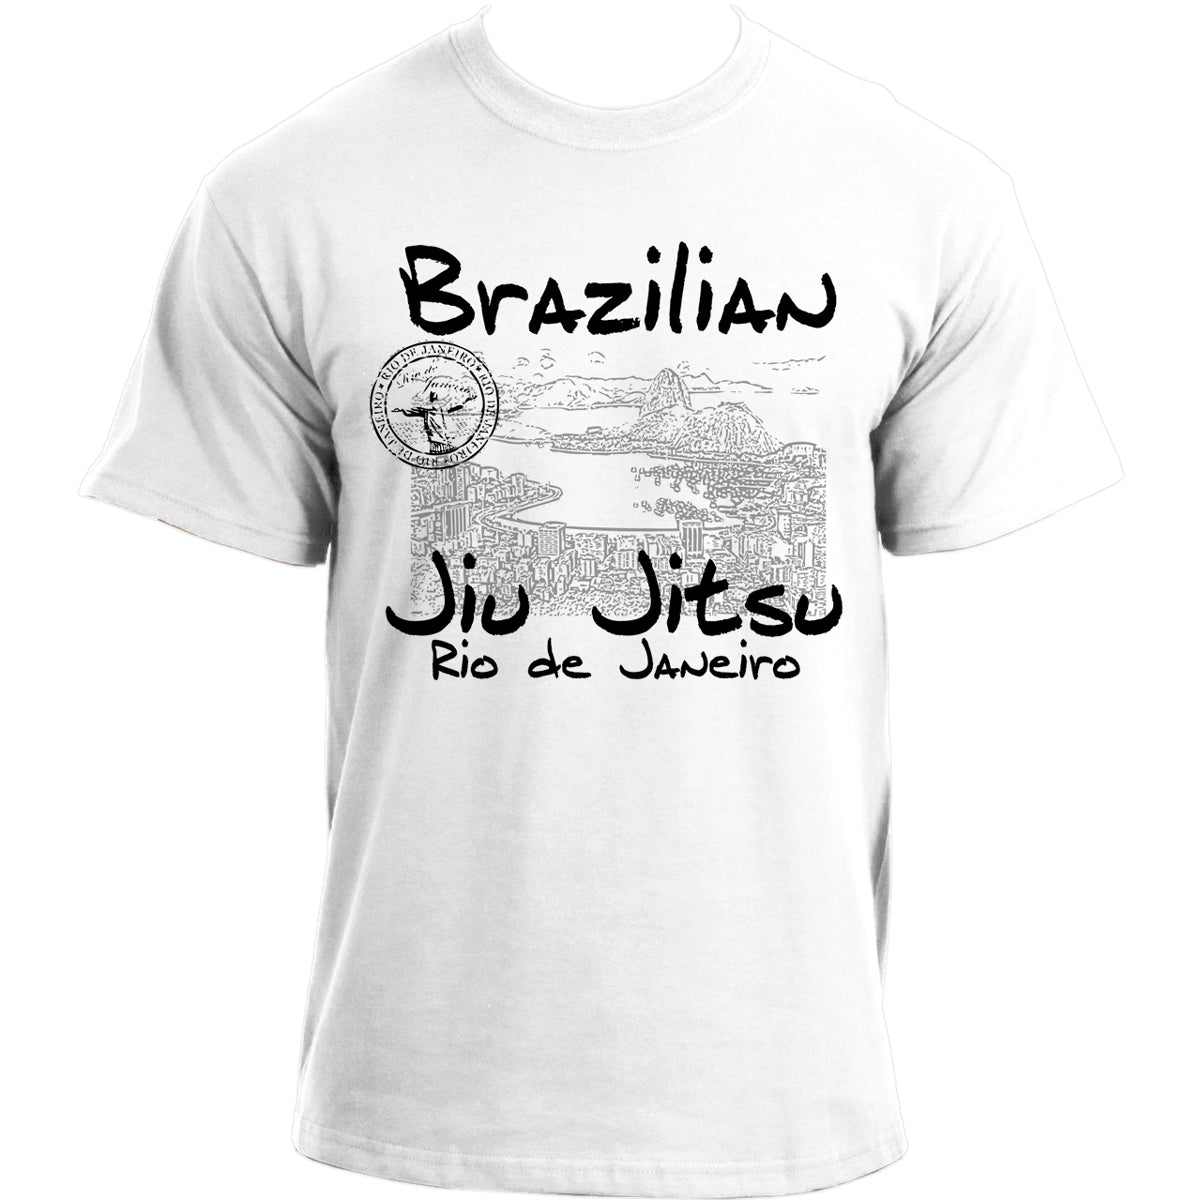 Brazilian Jiu Jitsu Rio de Janeiro Corcovado MMA UFC BJJ T-shirt